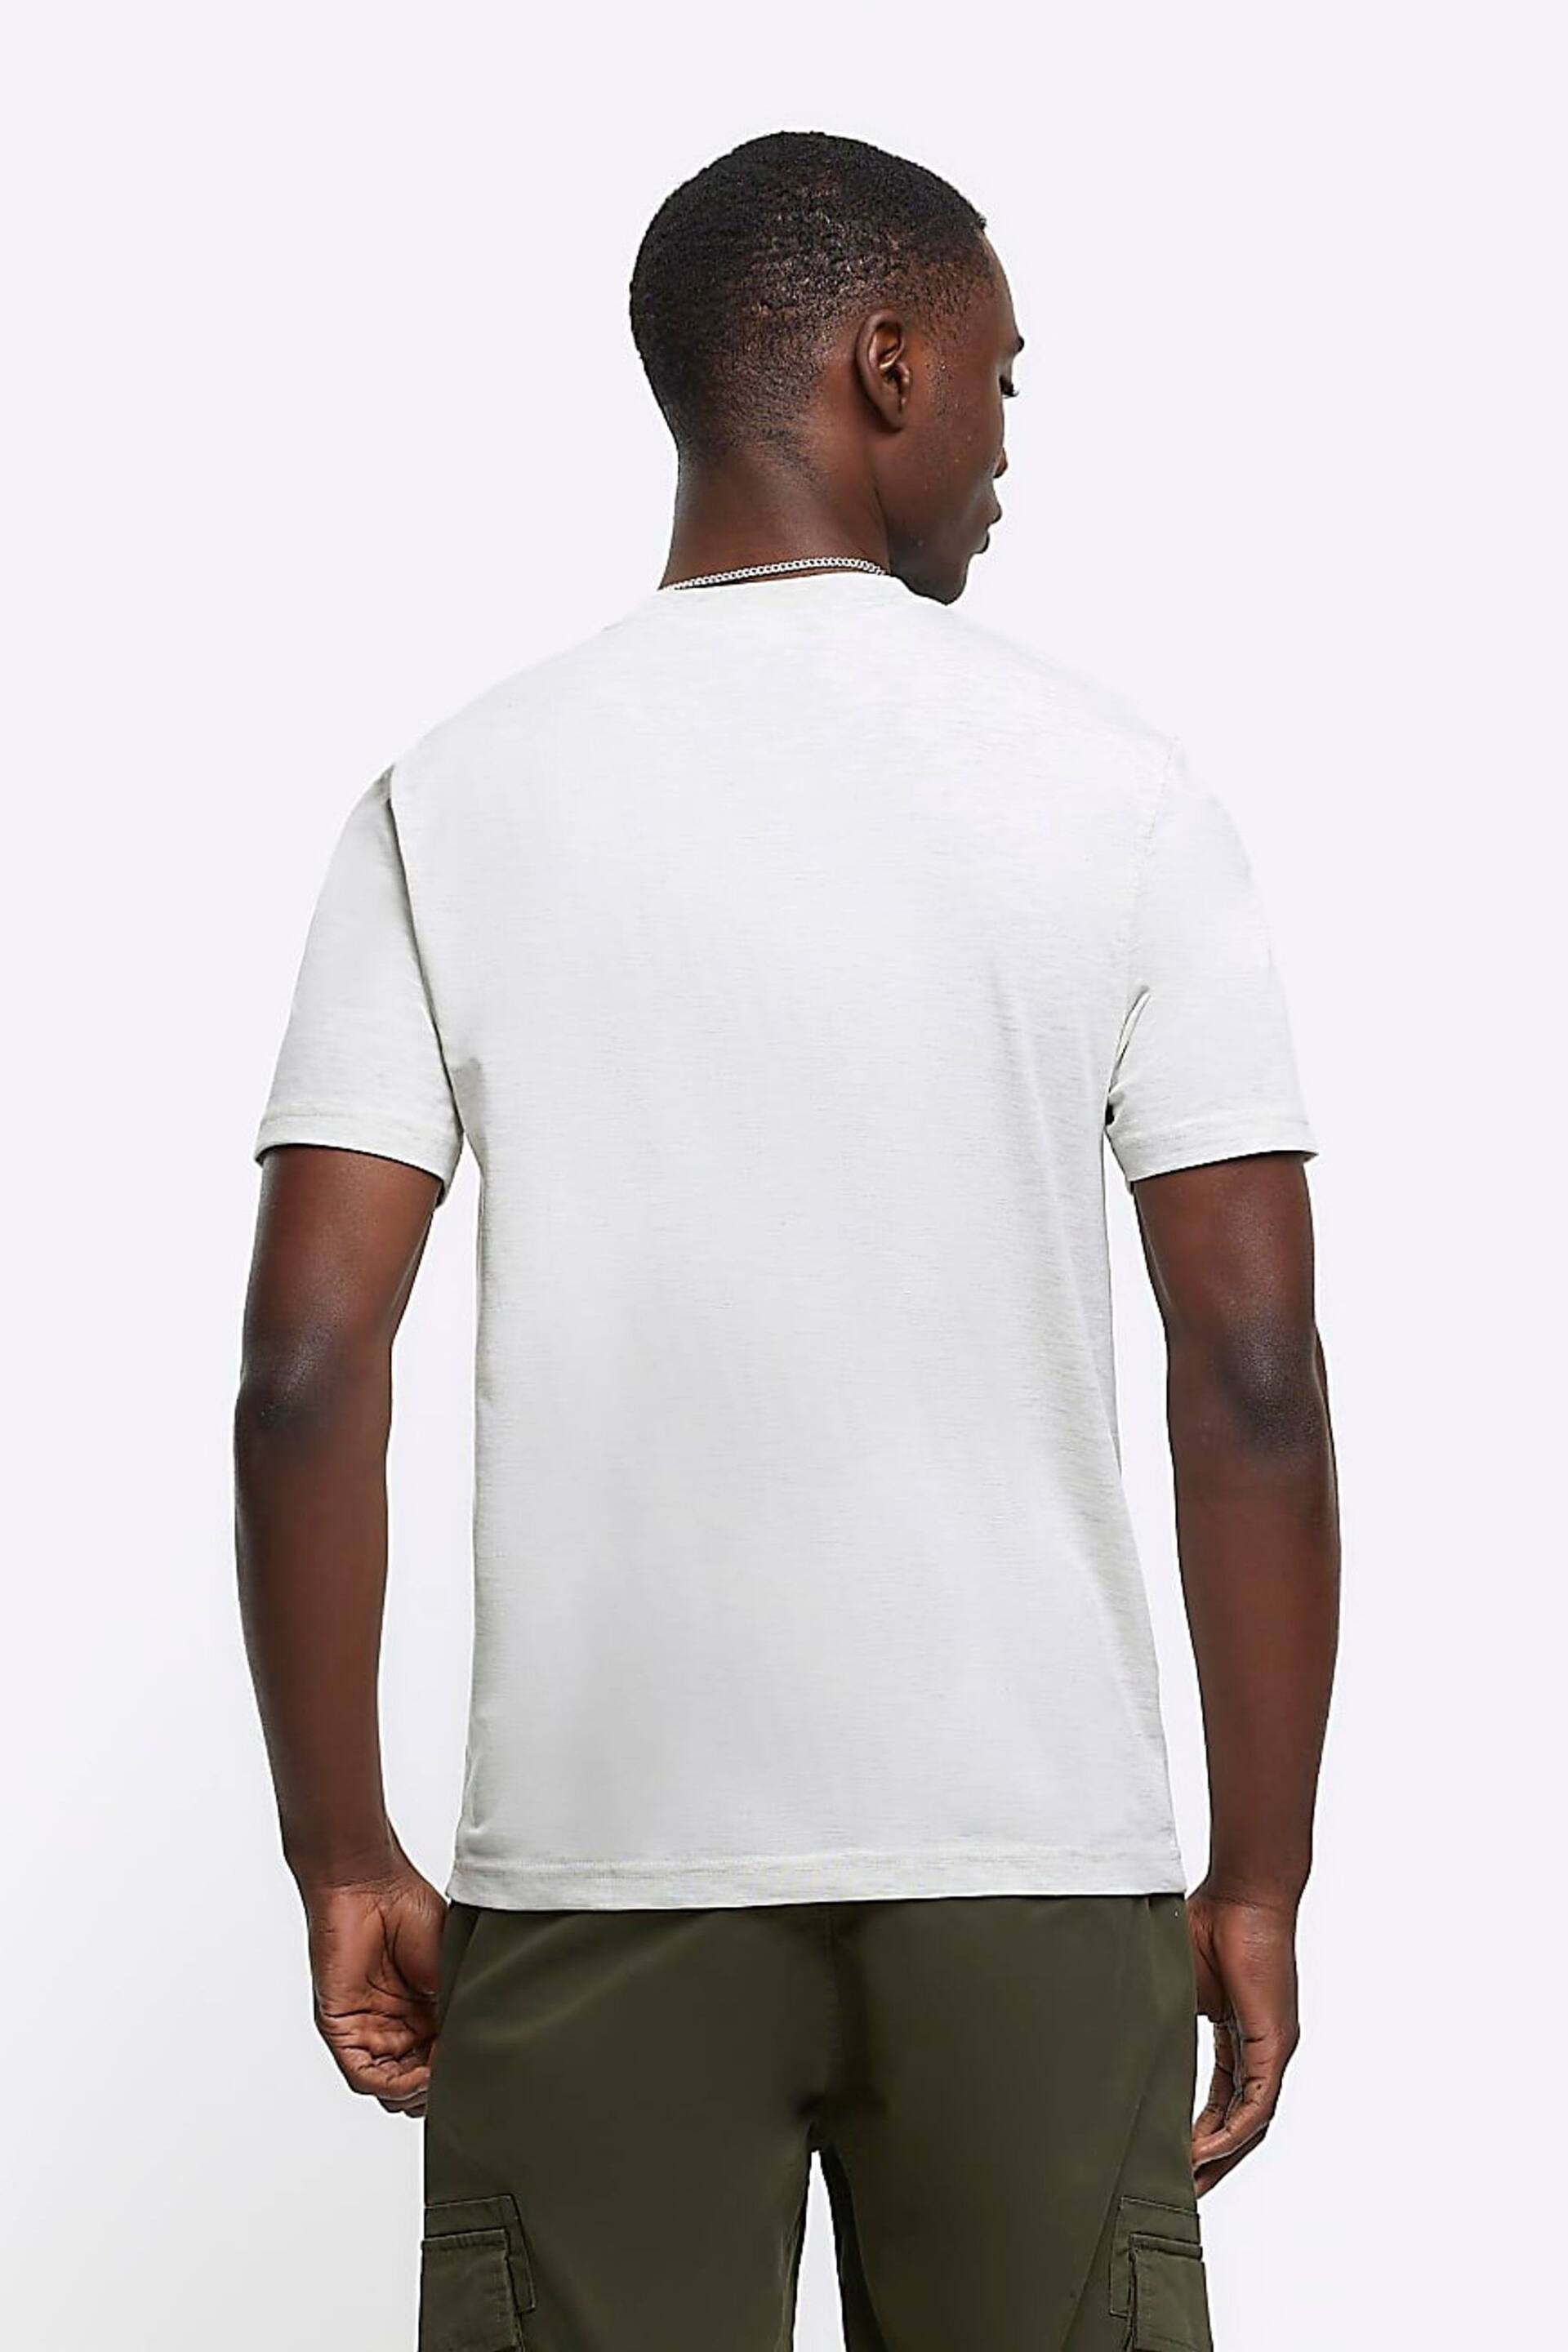 River Island Grey Slim Fit T-Shirt - Image 2 of 6